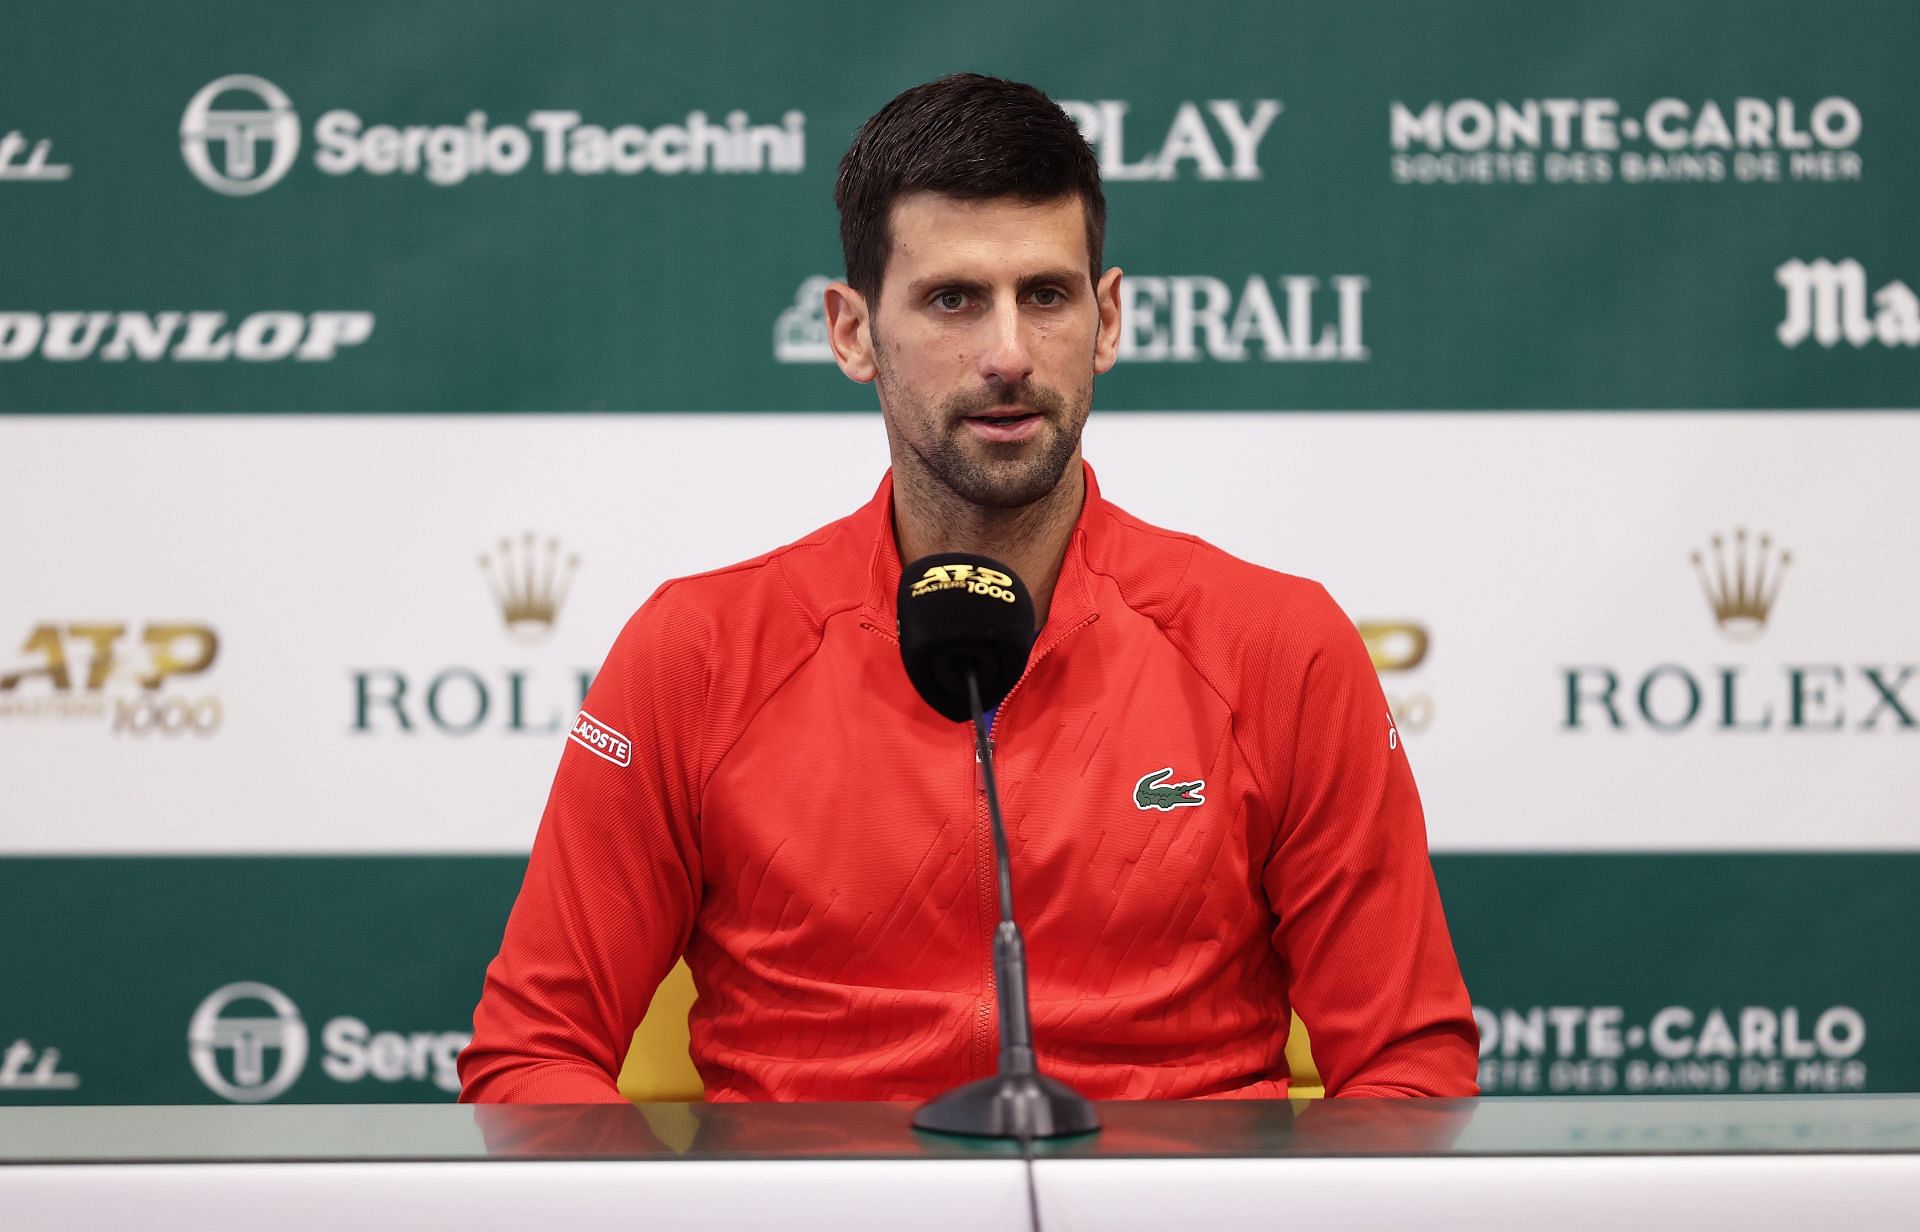 Novak Djokovic at a press conference.